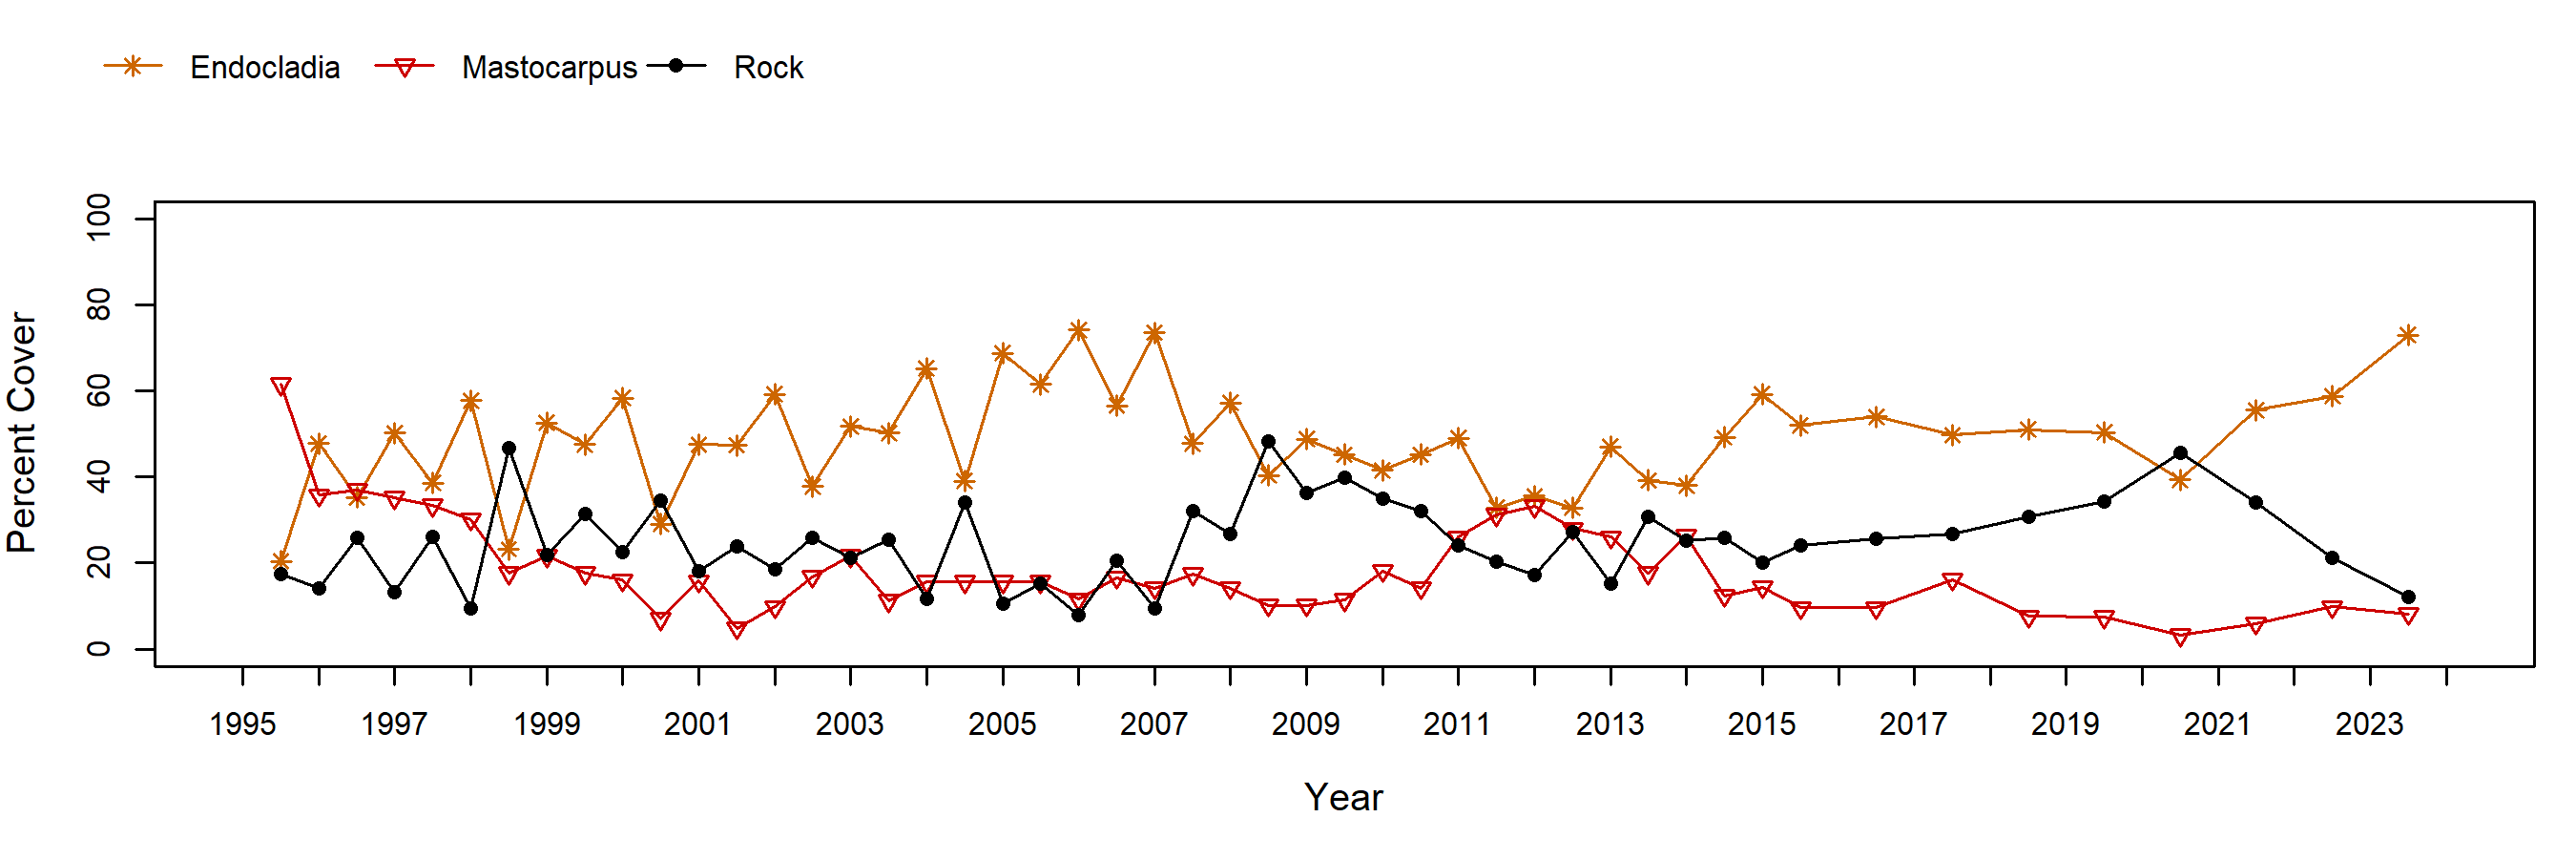 Shell Beach Mastocarpus trend plot